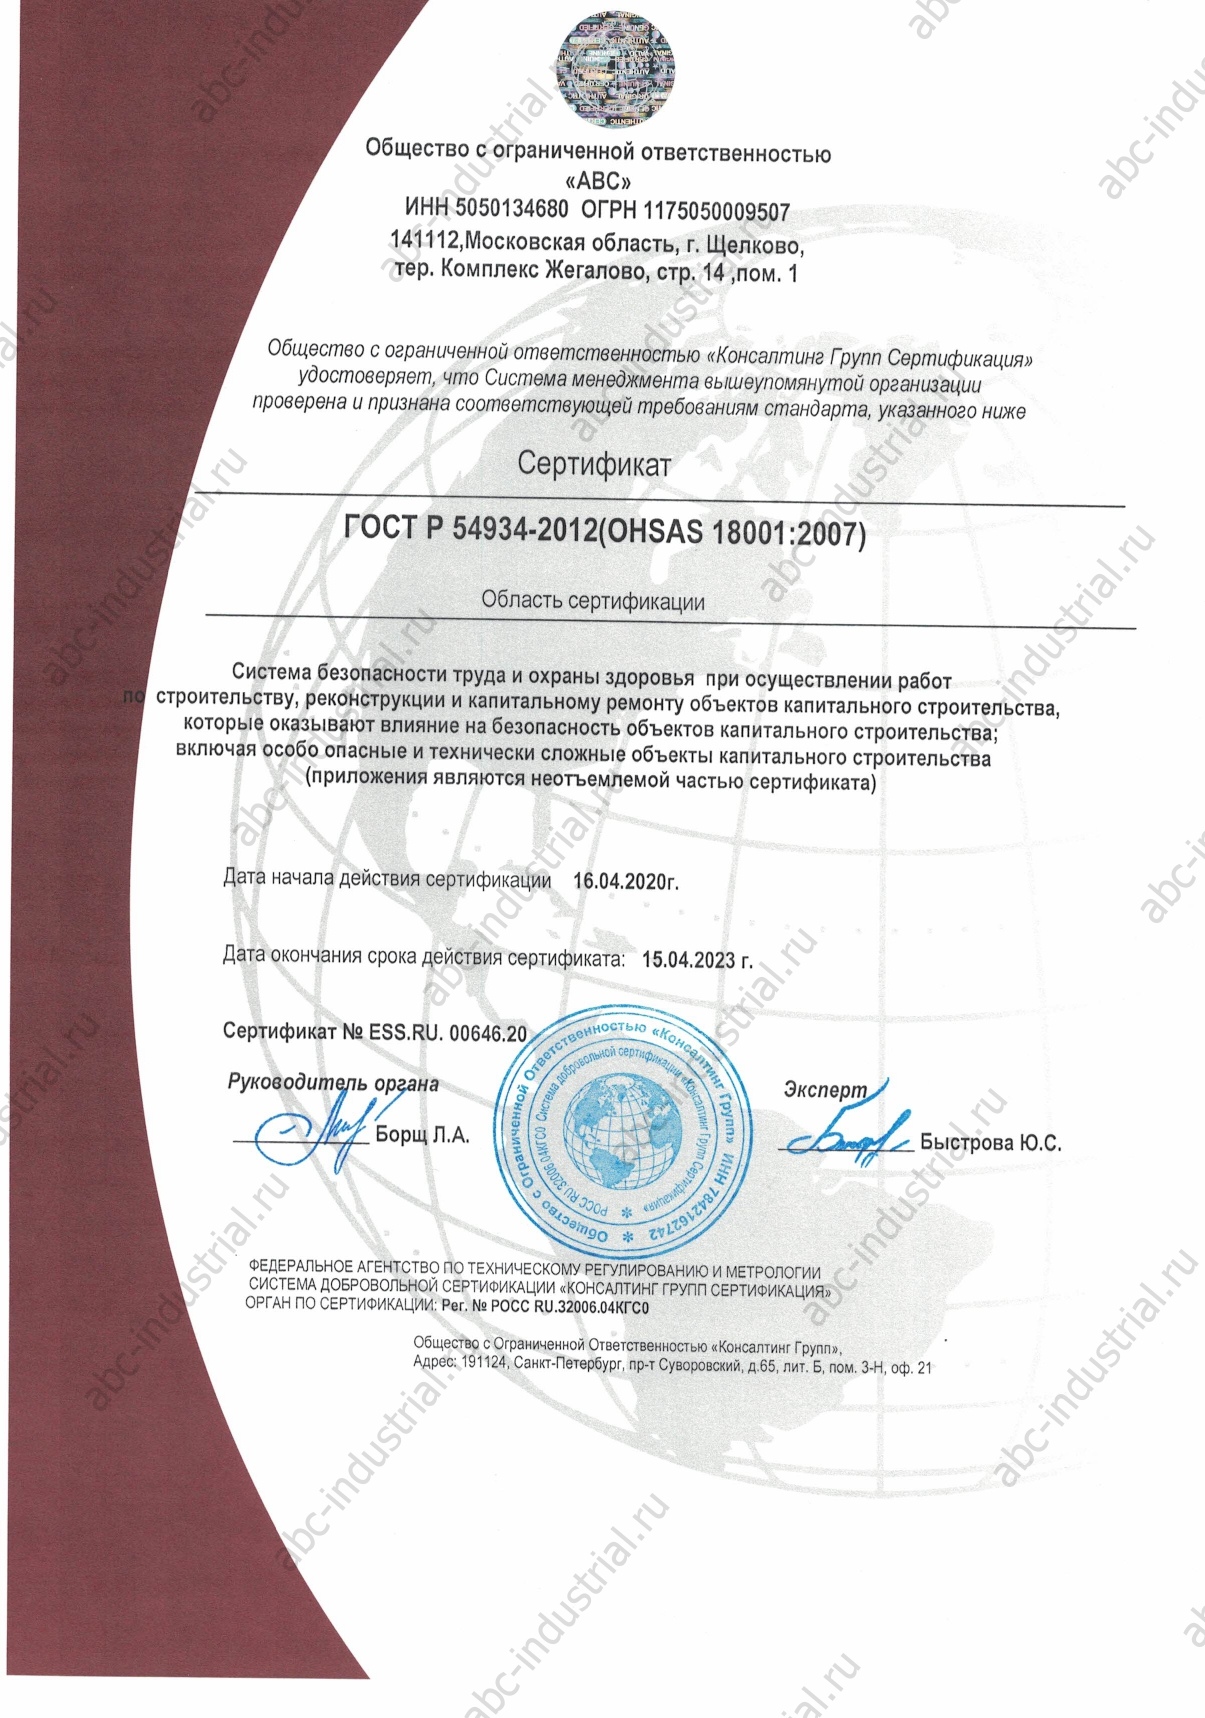 Сертификат ГОСТ Р 54934-2012 (OHSAS 18001:2007)